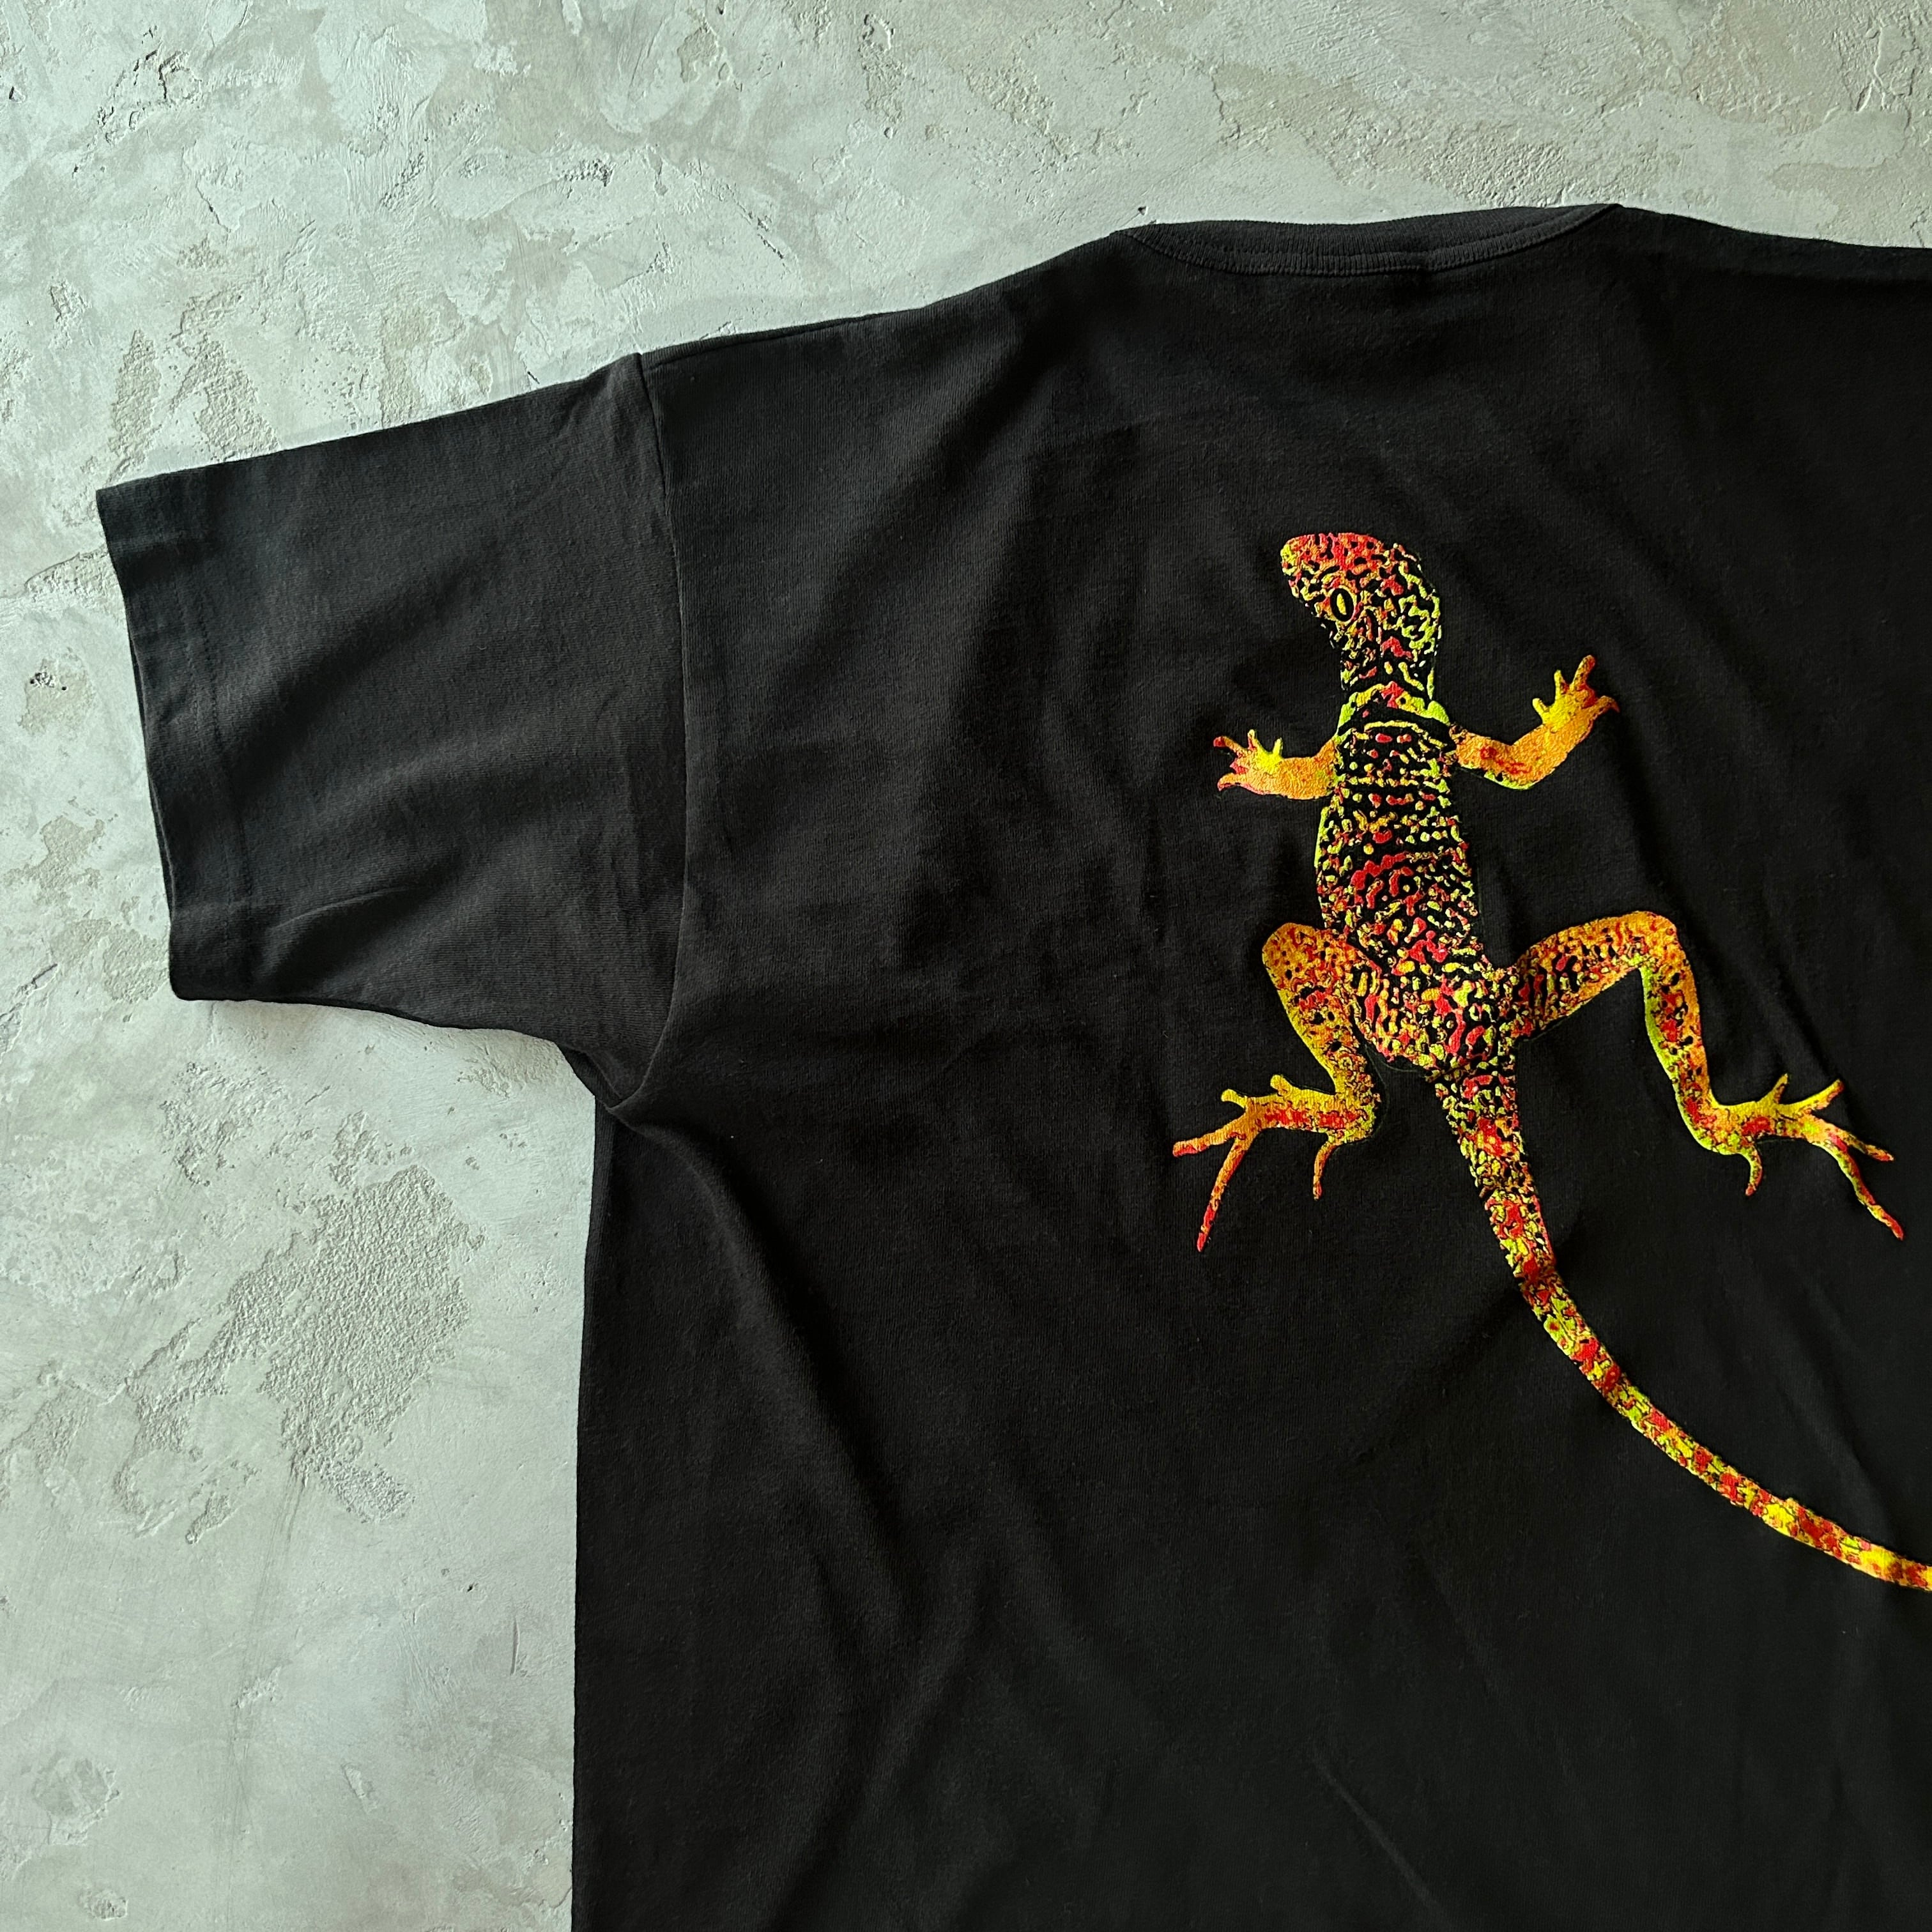 NOS】90s Marlboro Gecko Tシャツ XL リザード-